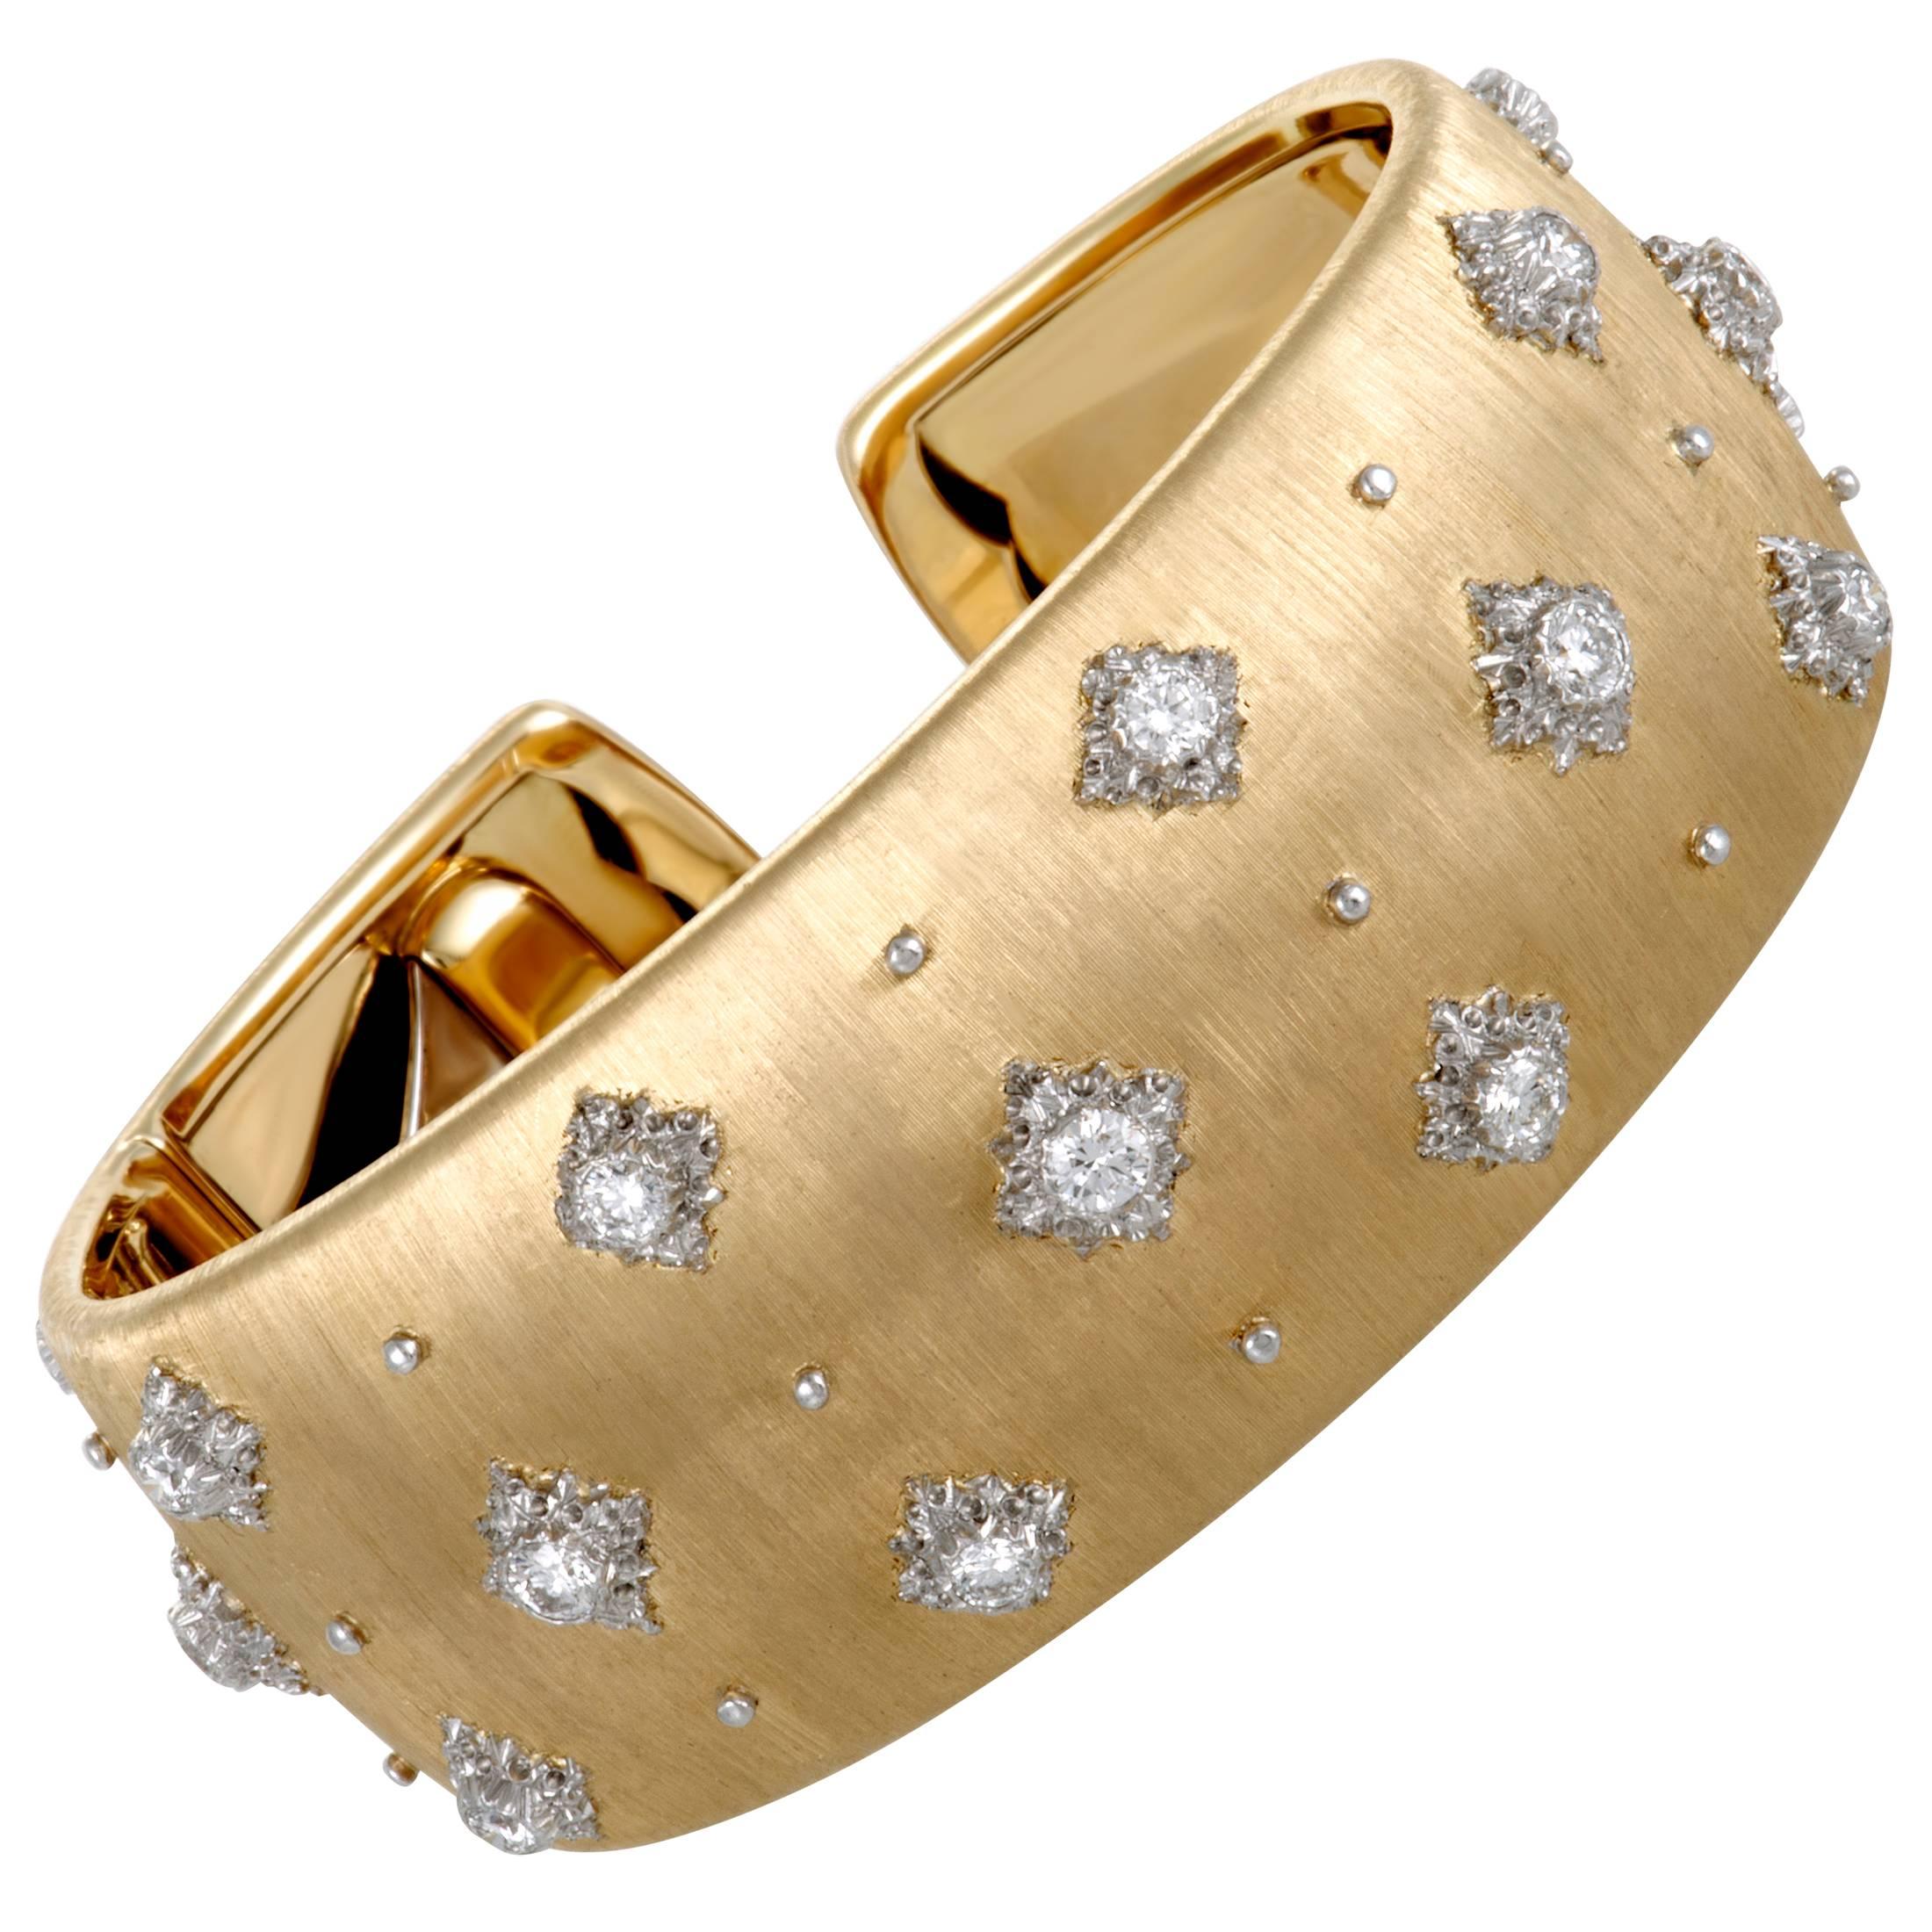 Buccellati Macri Diamond Yellow and White Gold Cuff Bracelet